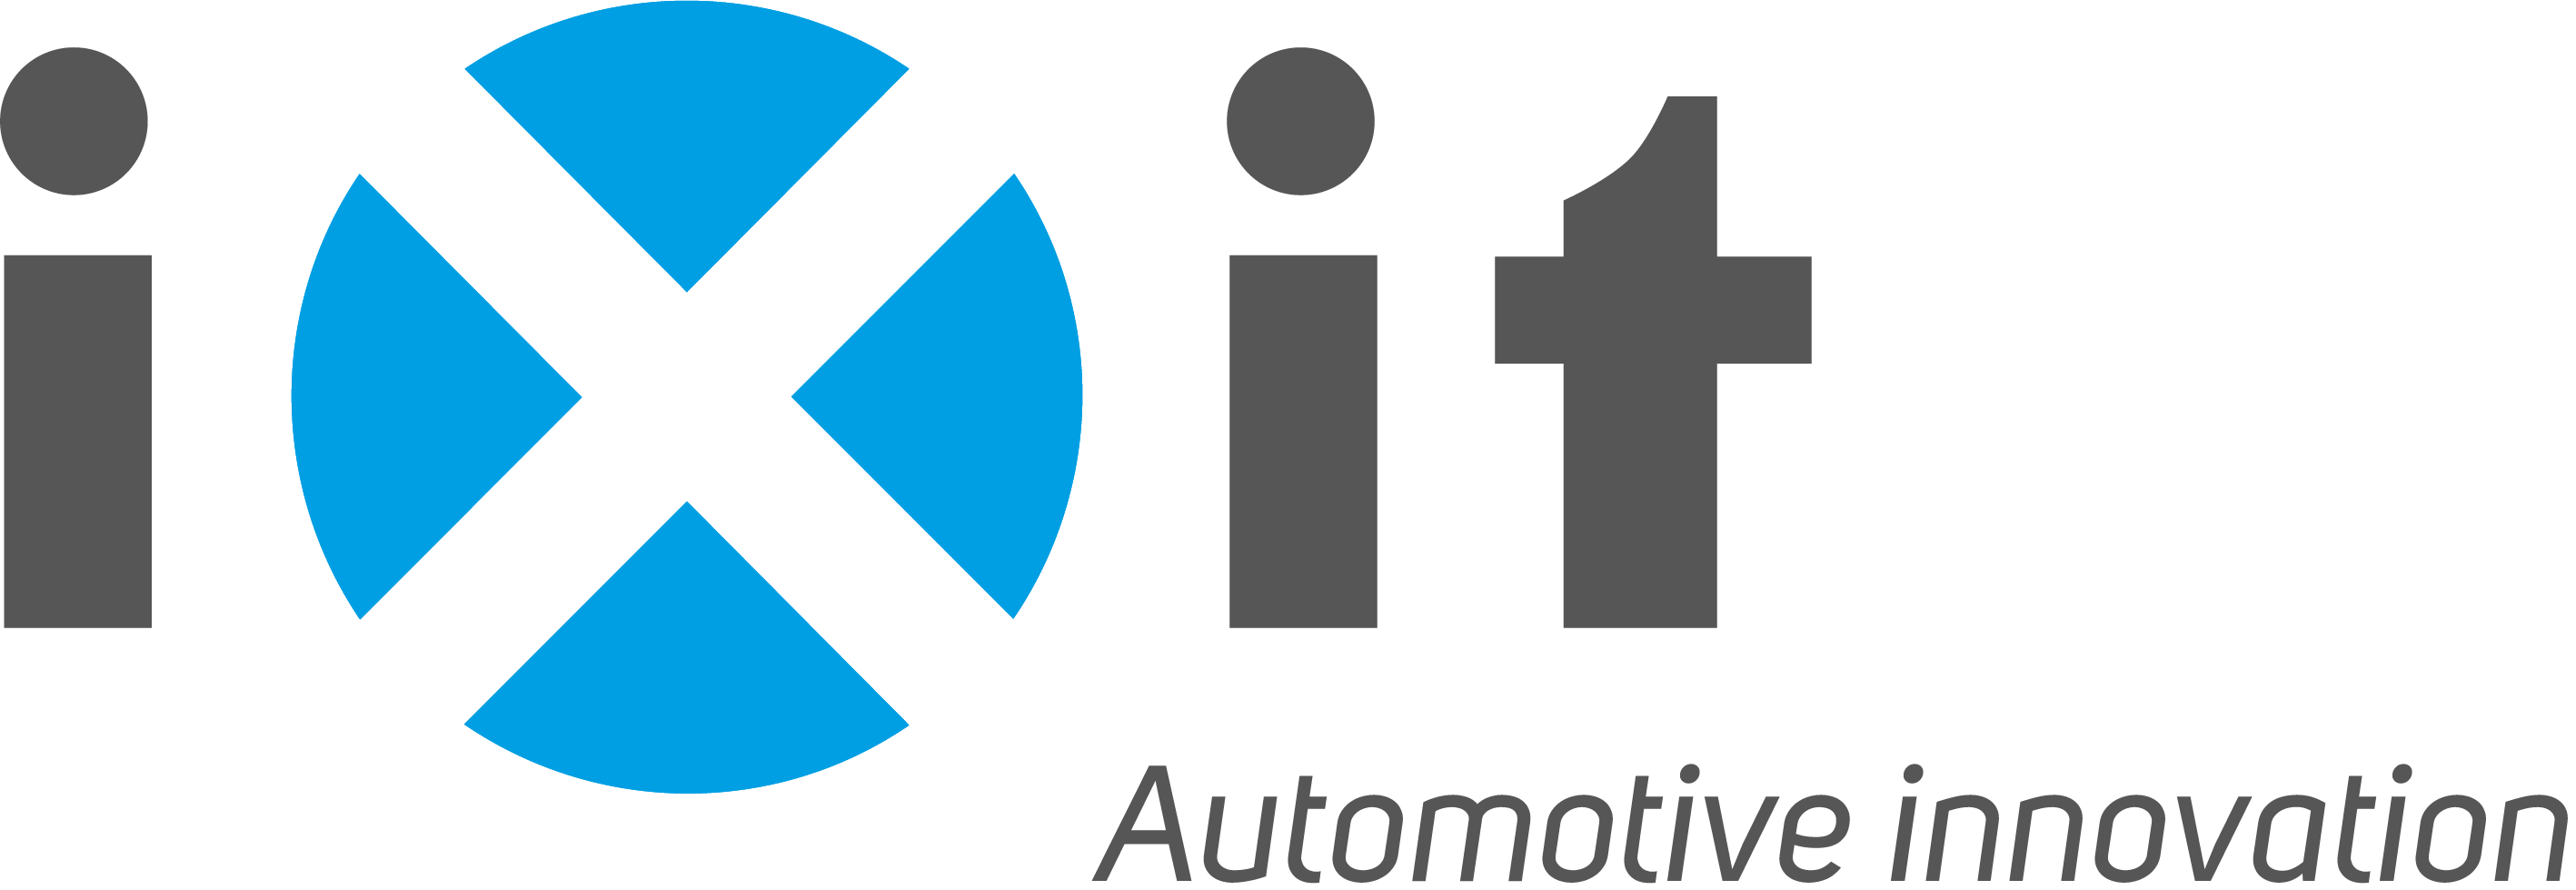 IXIT Automotive innovation